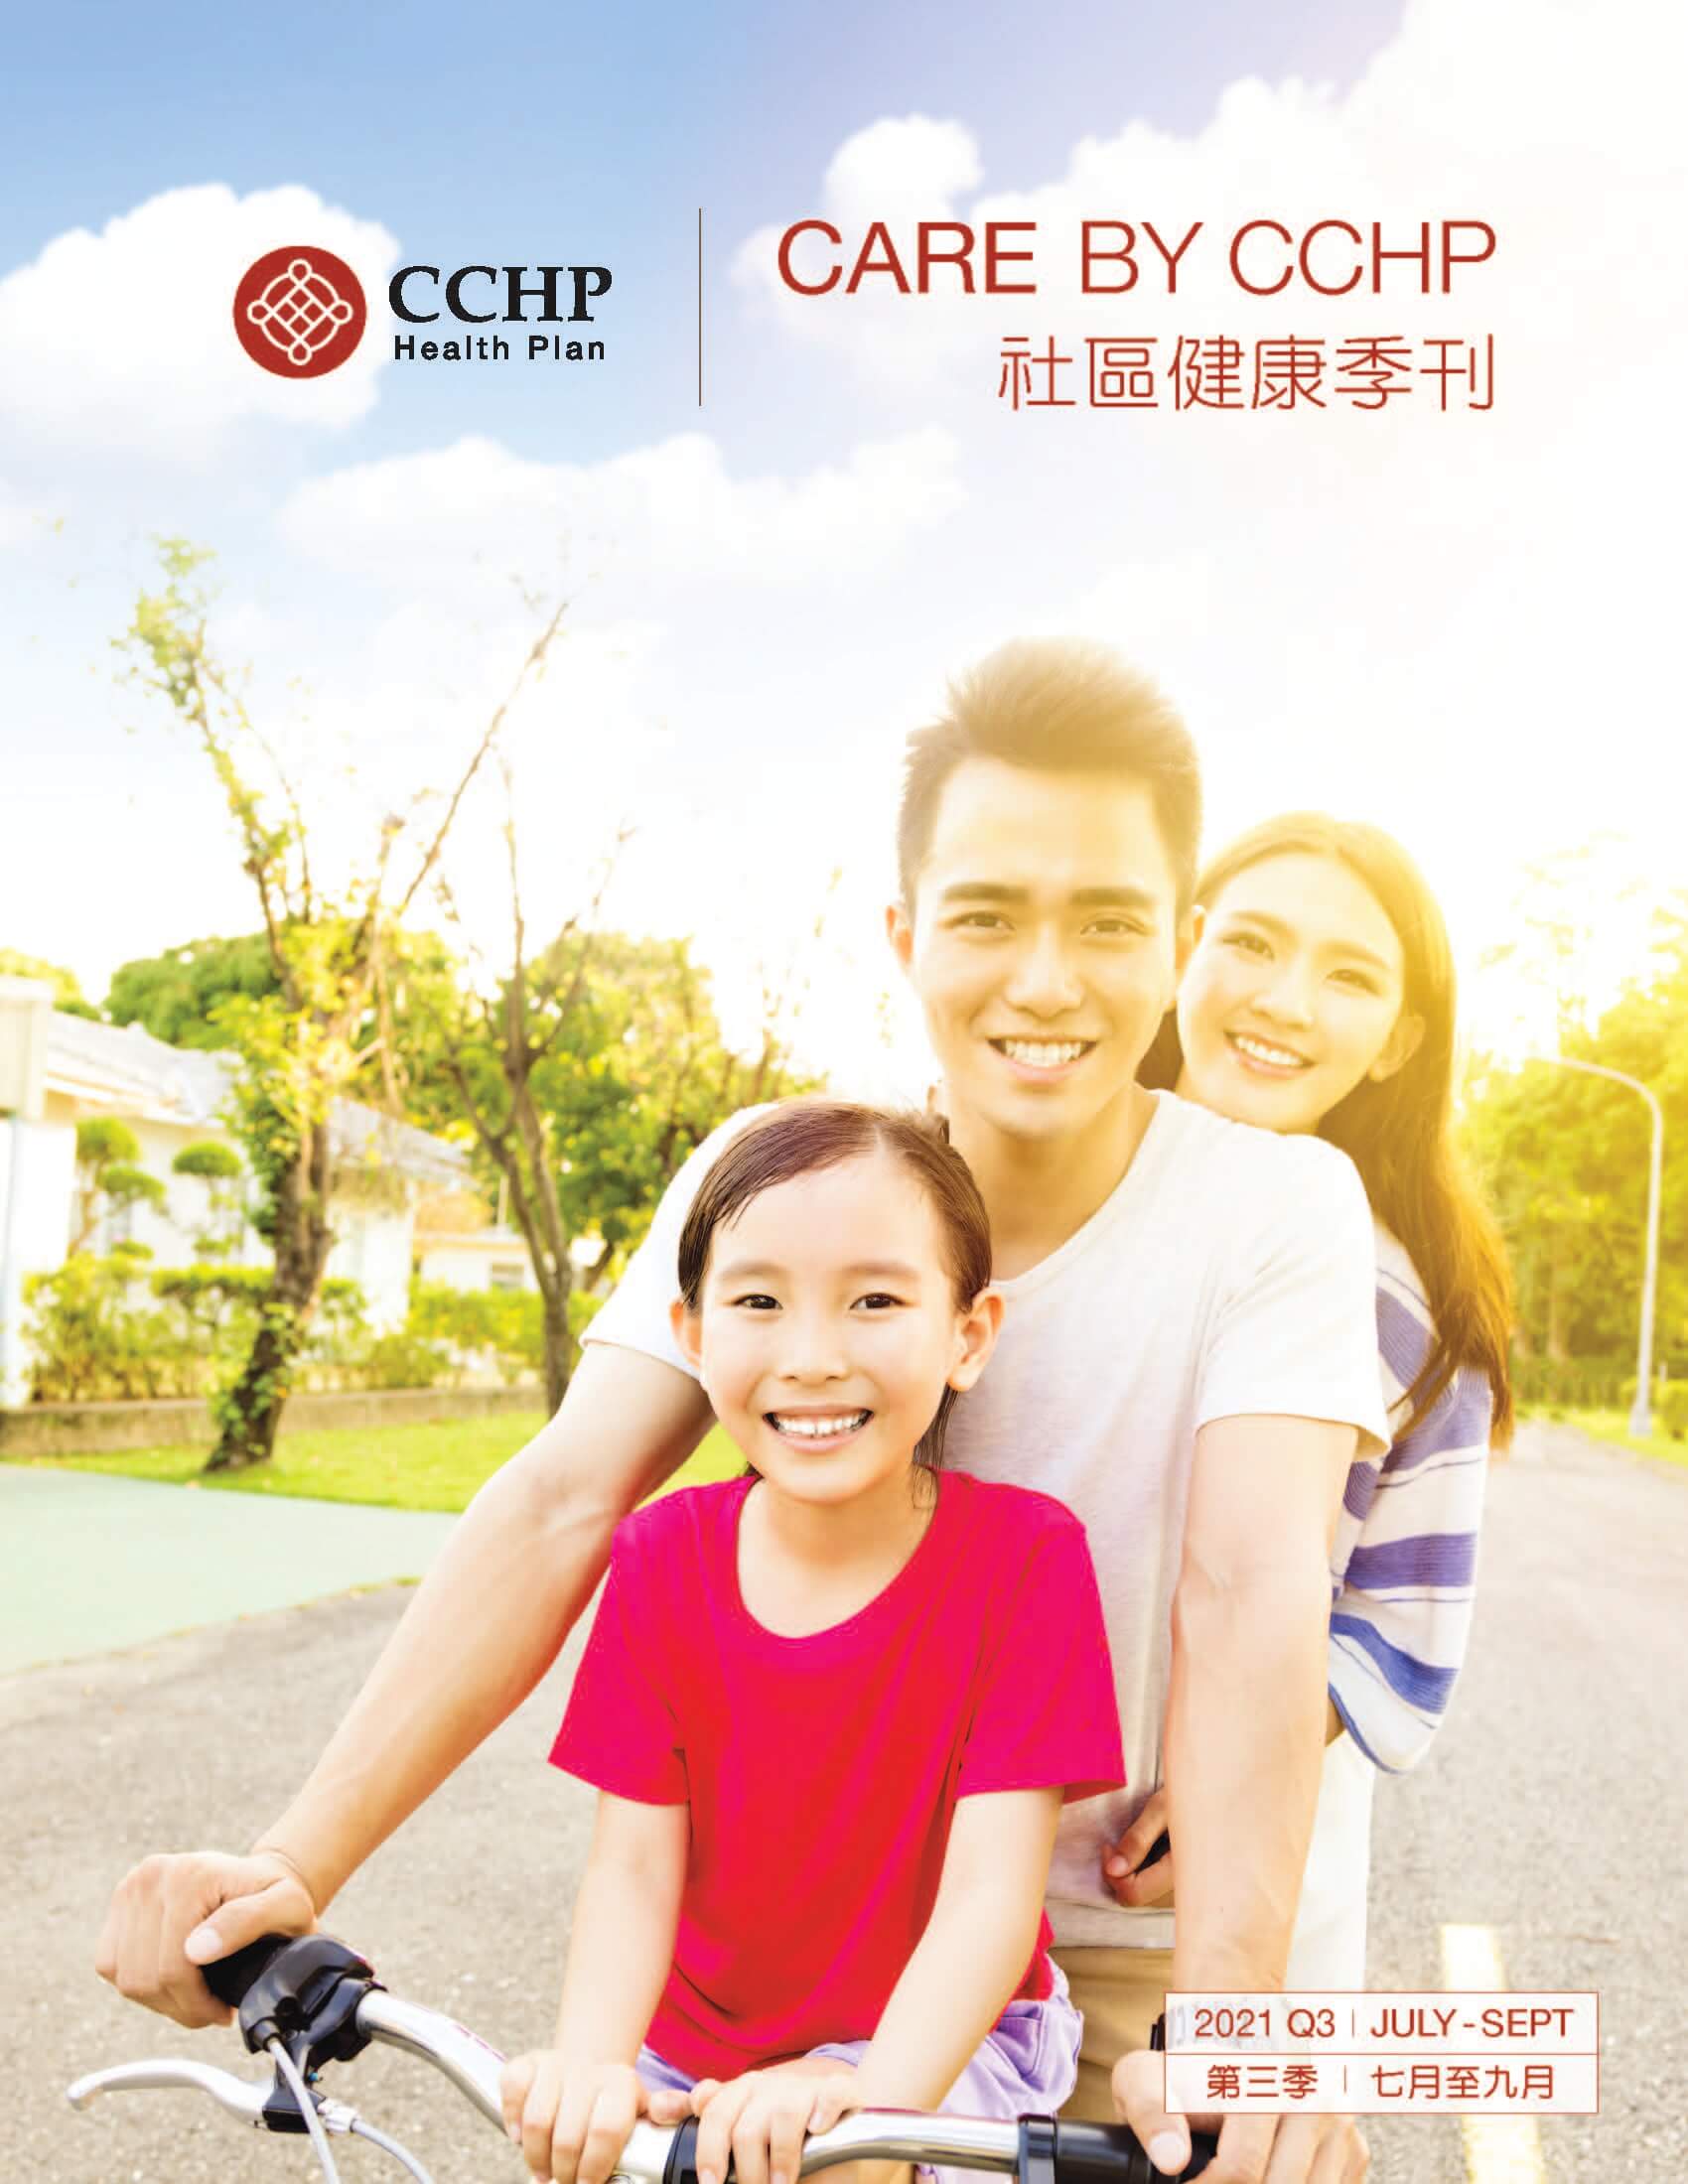 CCHP 2021 q3 newsletter cover, family riding bike